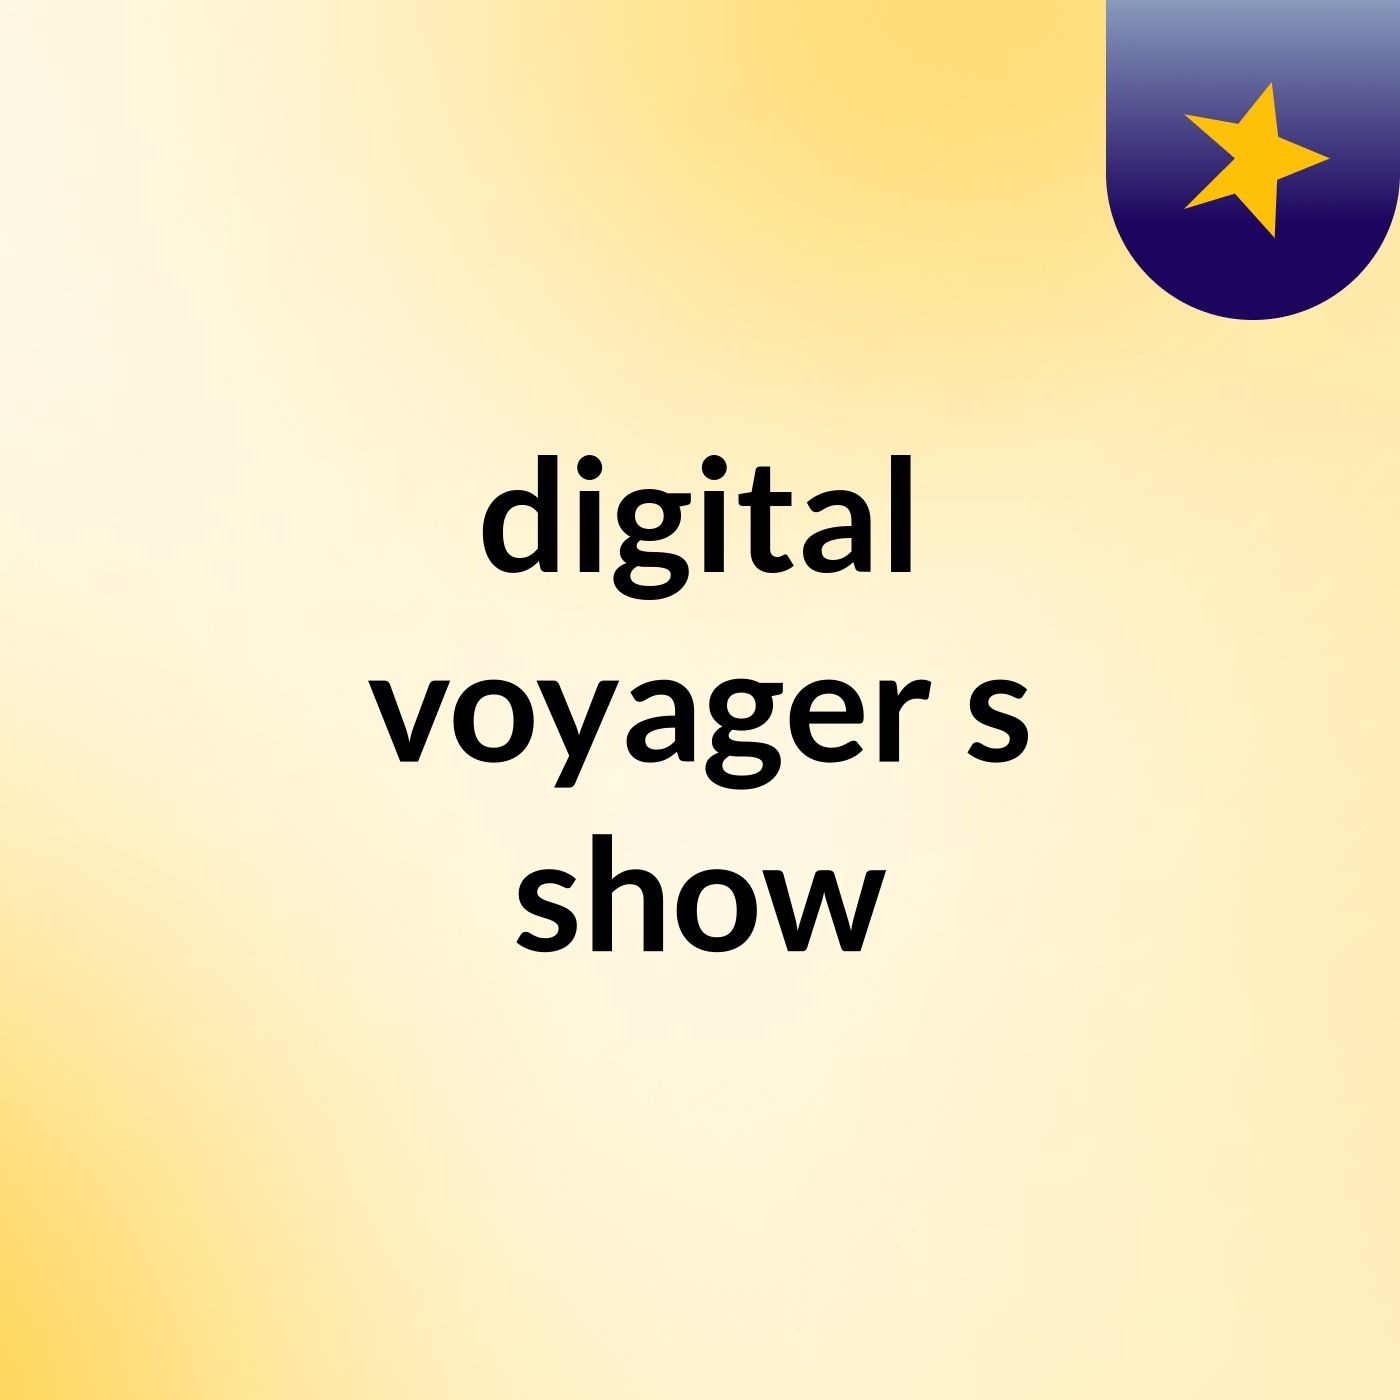 digital voyager's show